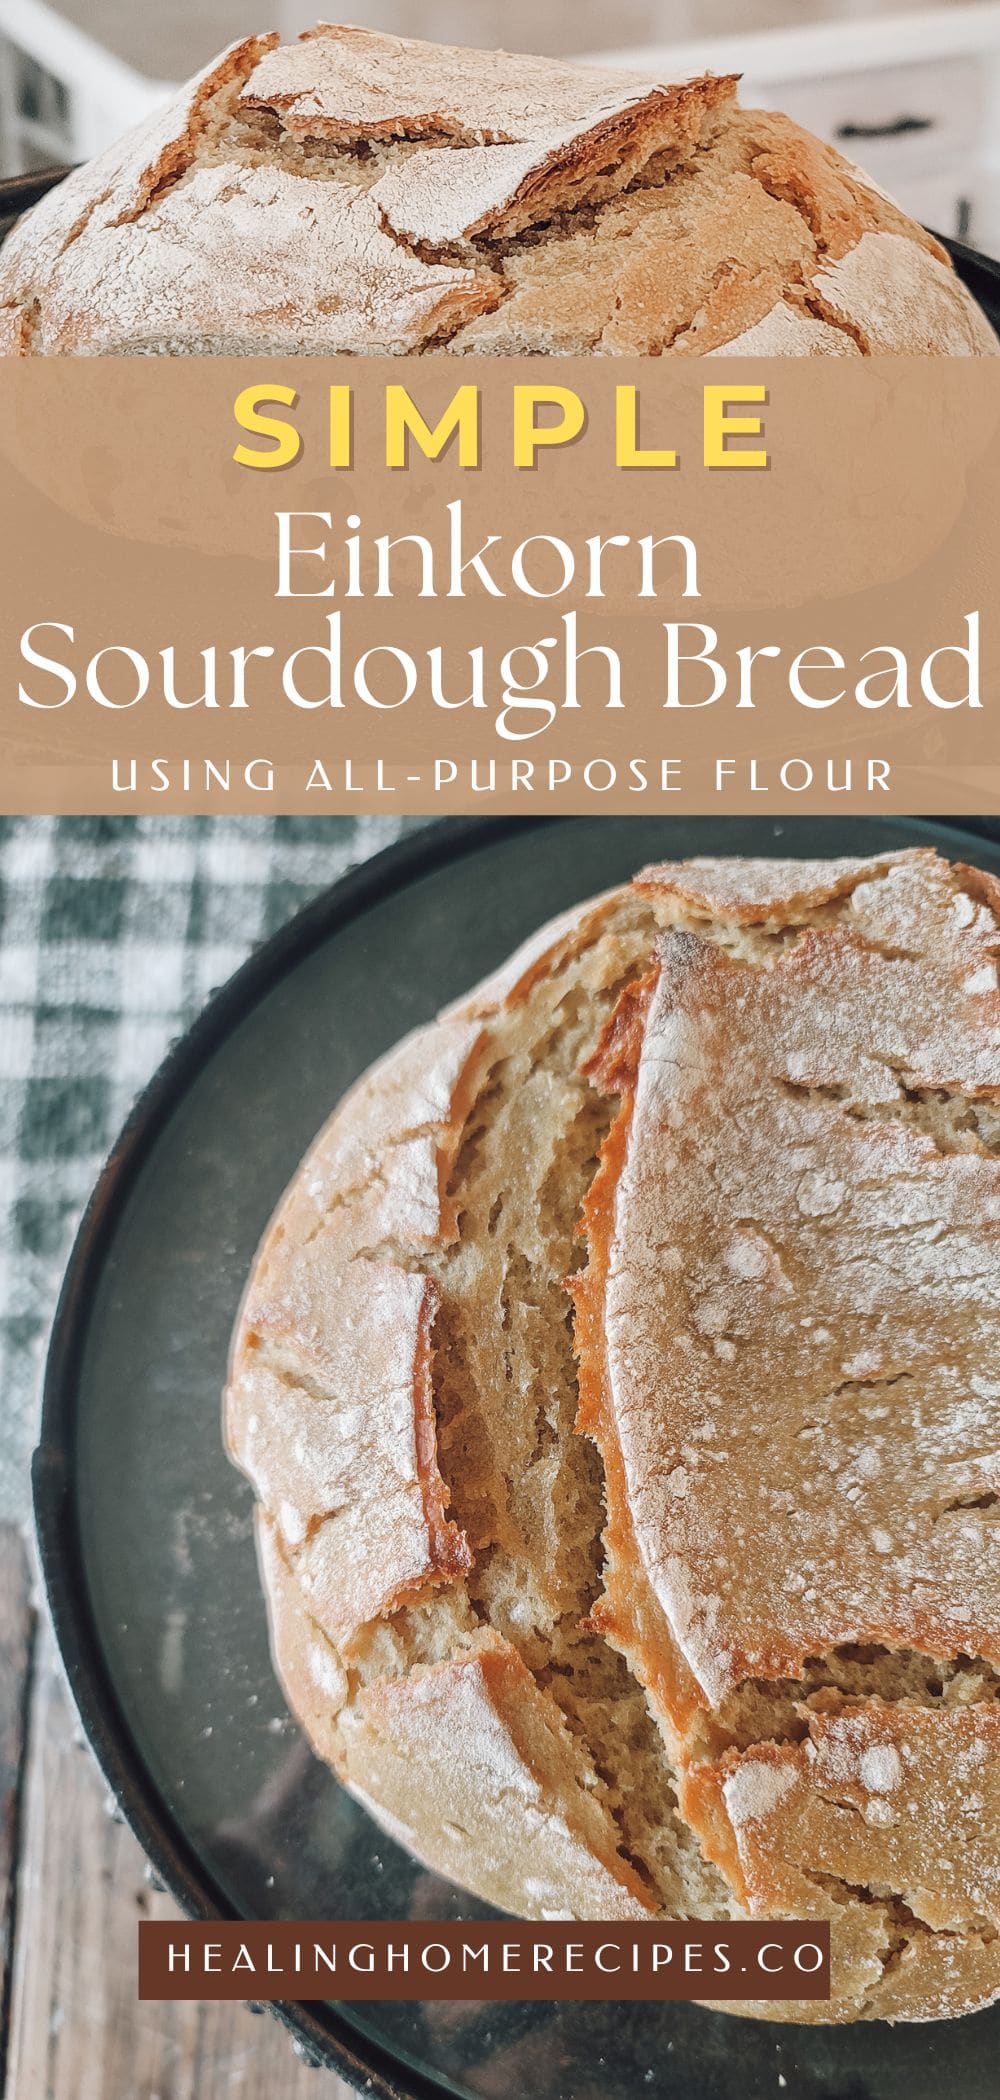 Einkorn sourdough bread